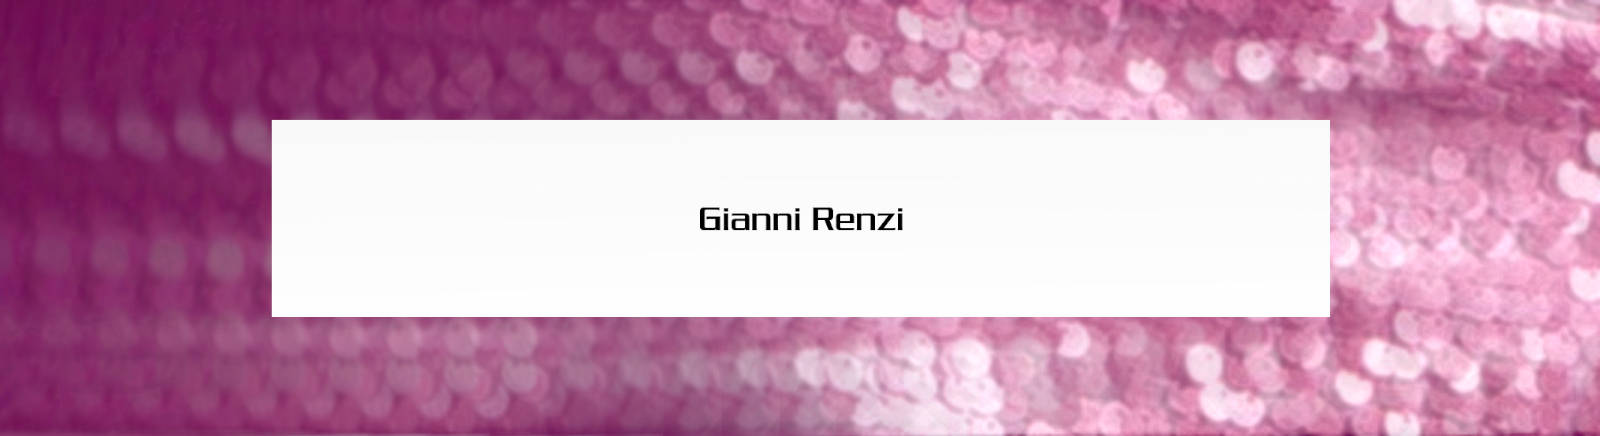 Prange: Gianni Renzi Herrenschuhe online kaufen online shoppen